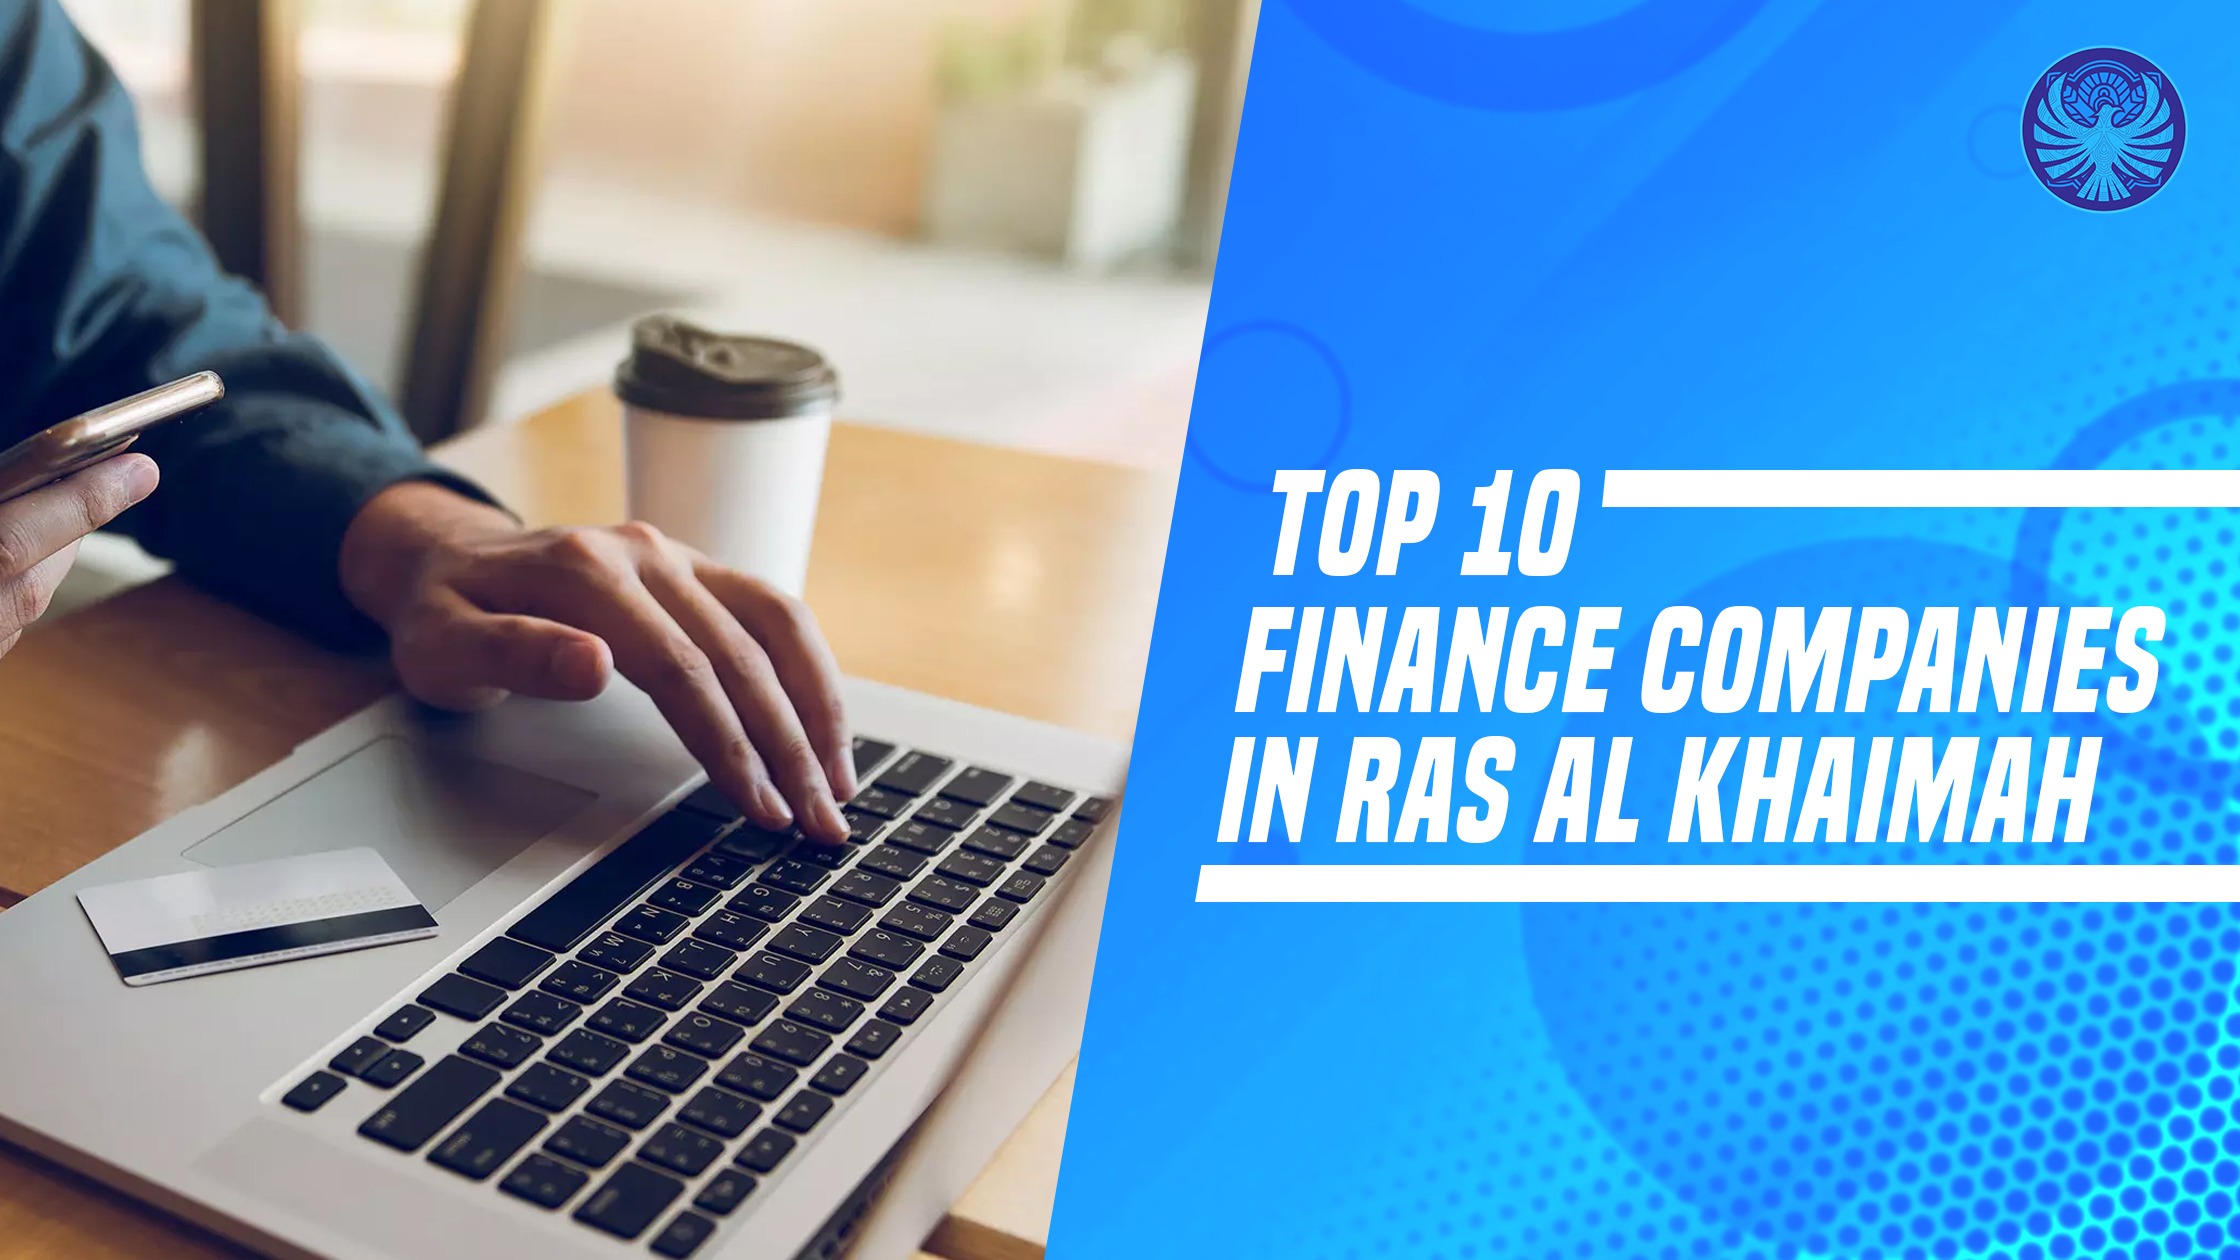 Top 10 Finance Companies in Ras Al Khaimah